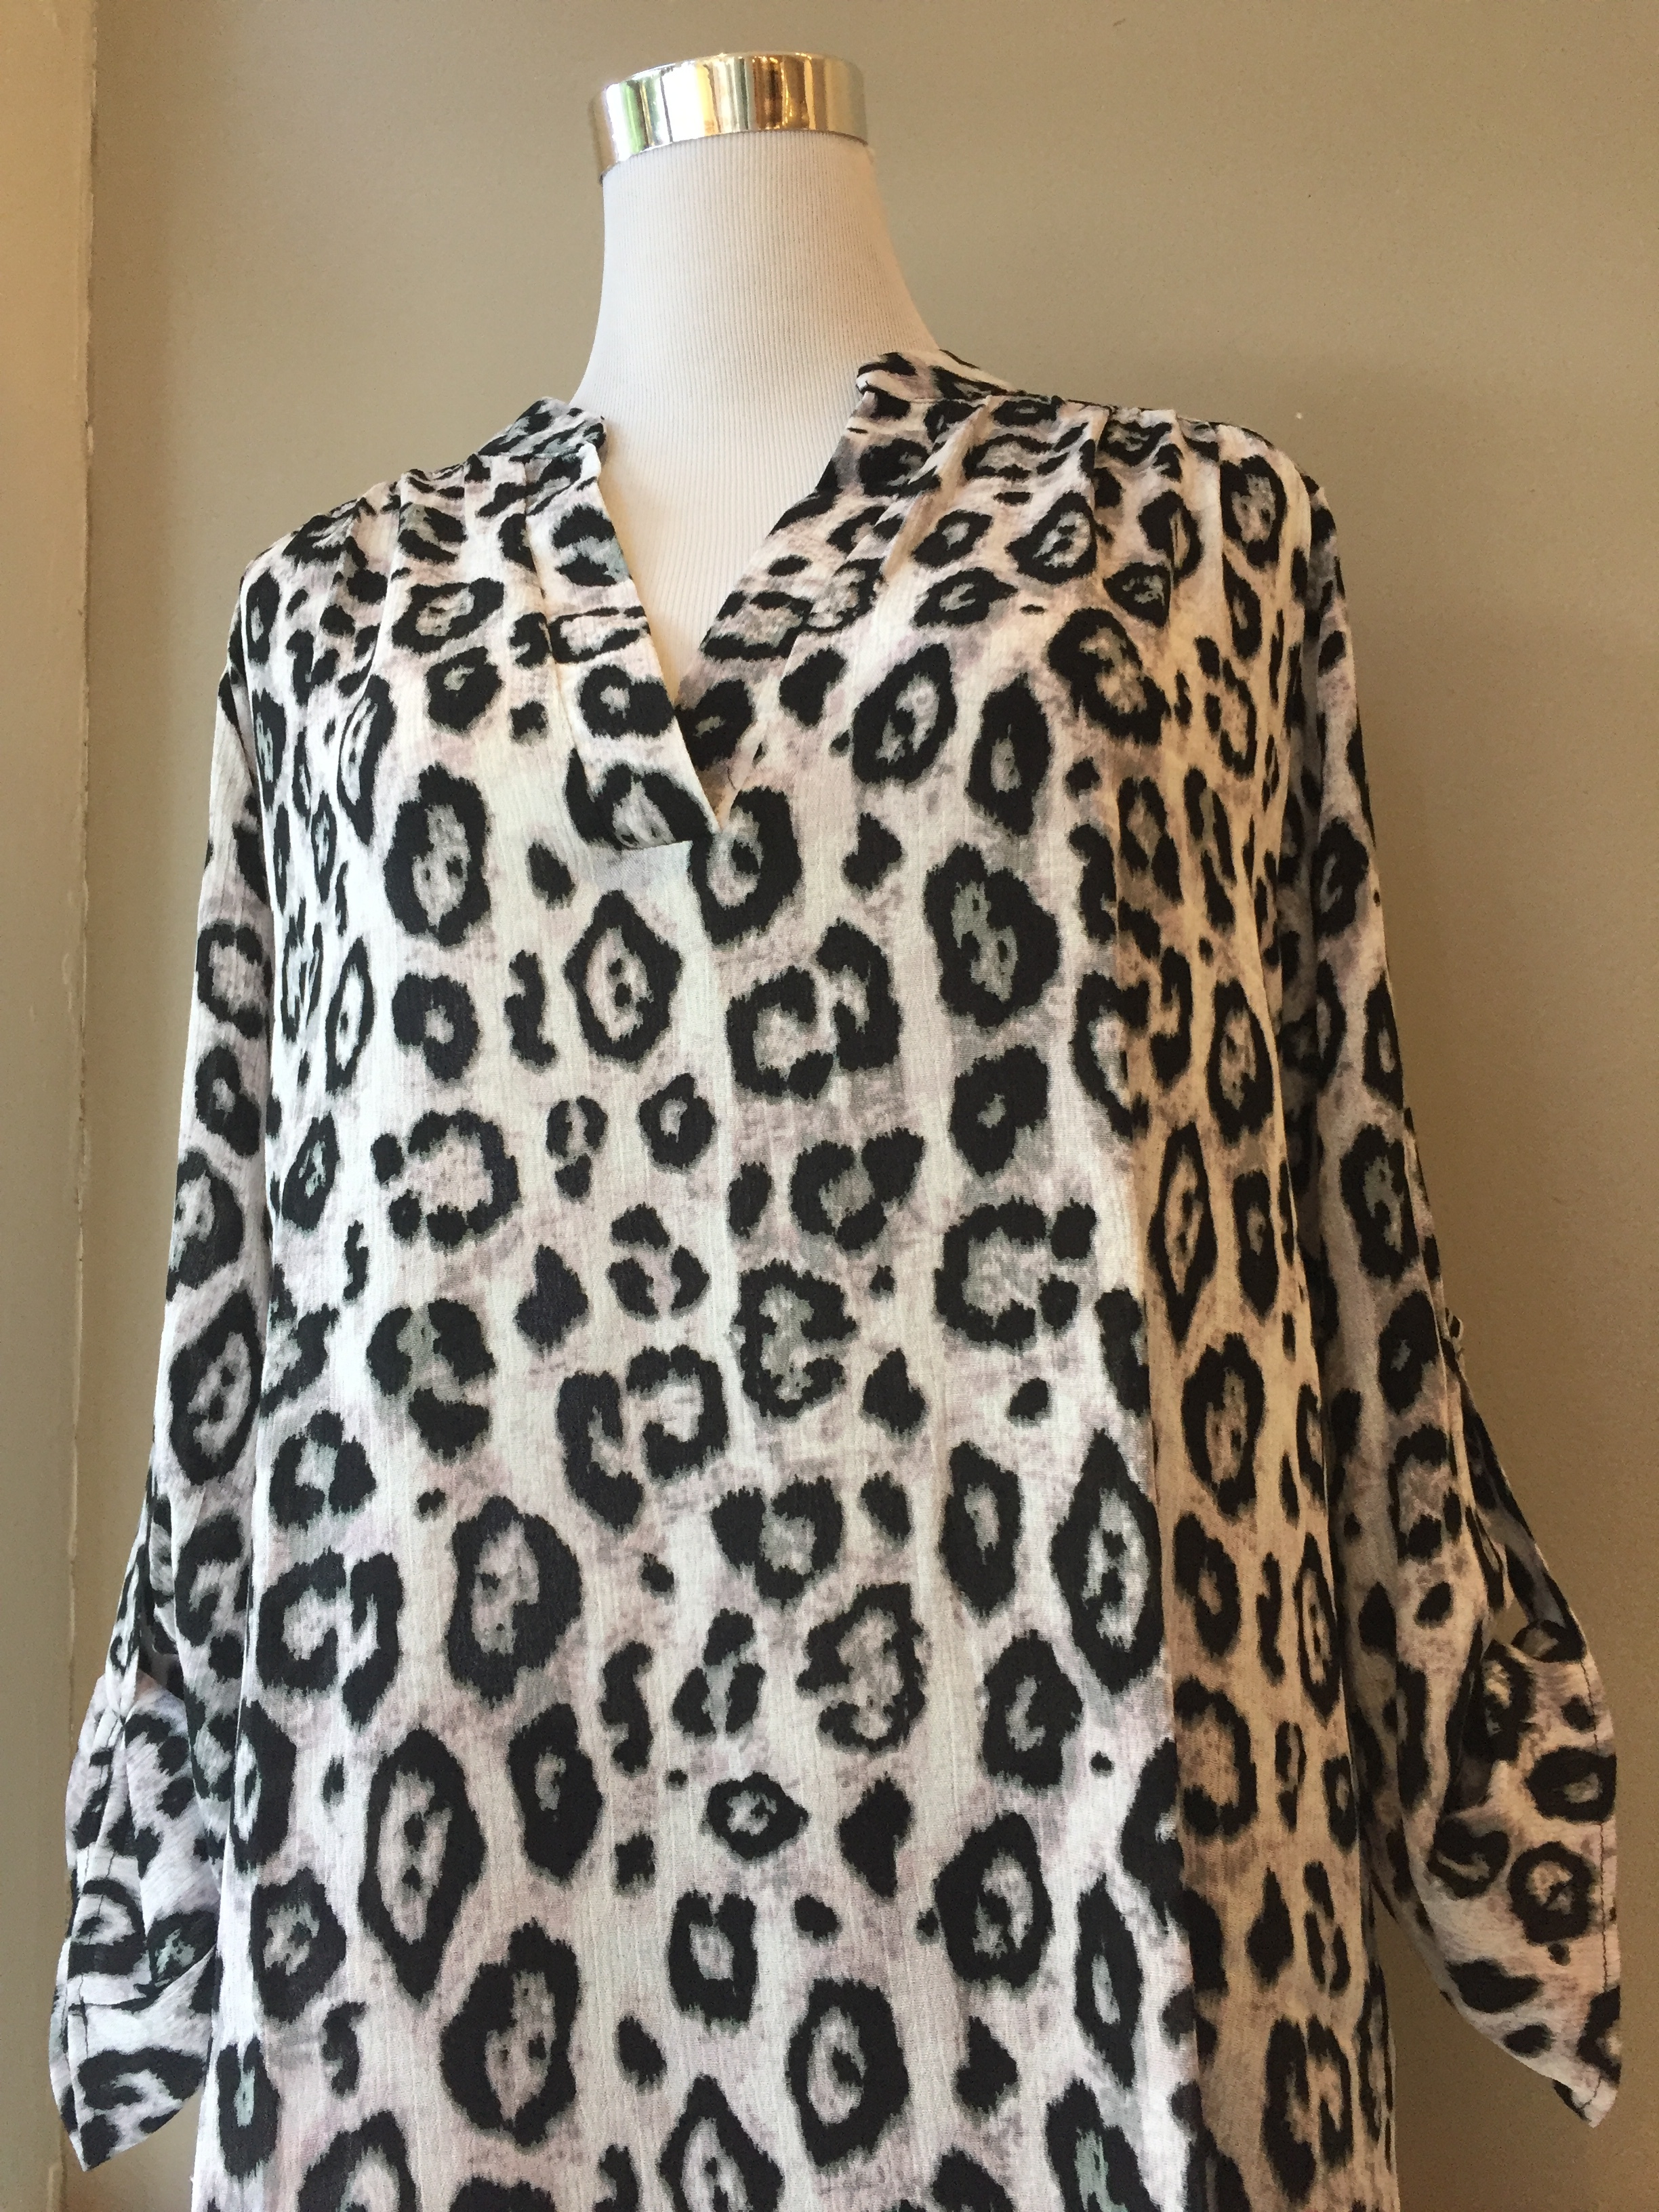 Animal print blouse ($35)